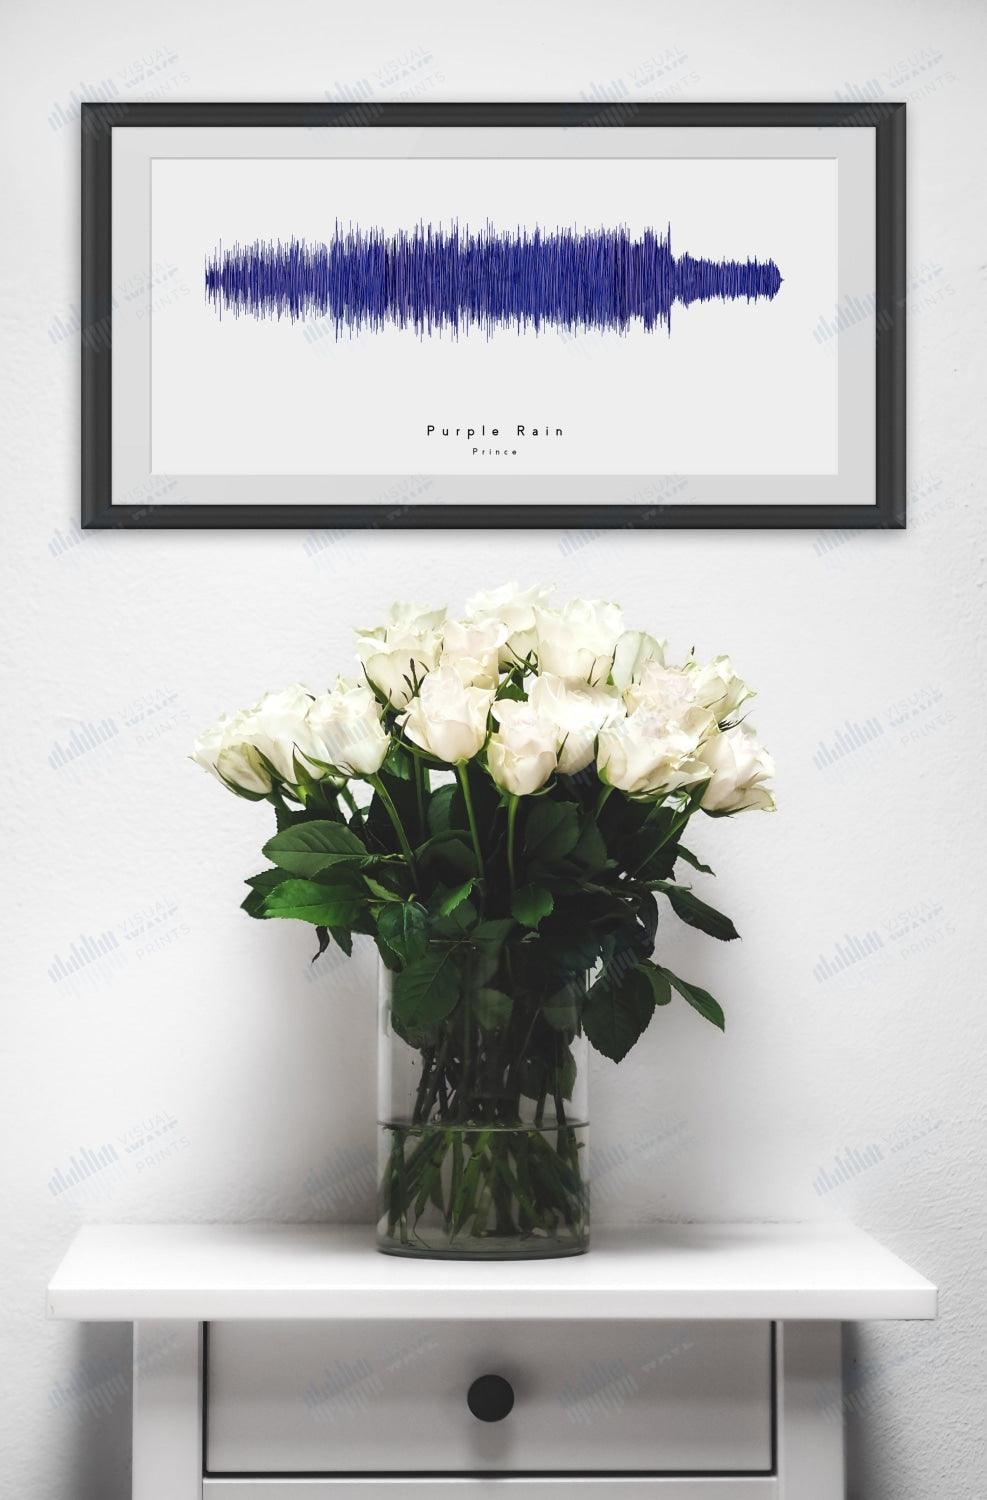 Purple Rain by Prince - Visual Wave Prints